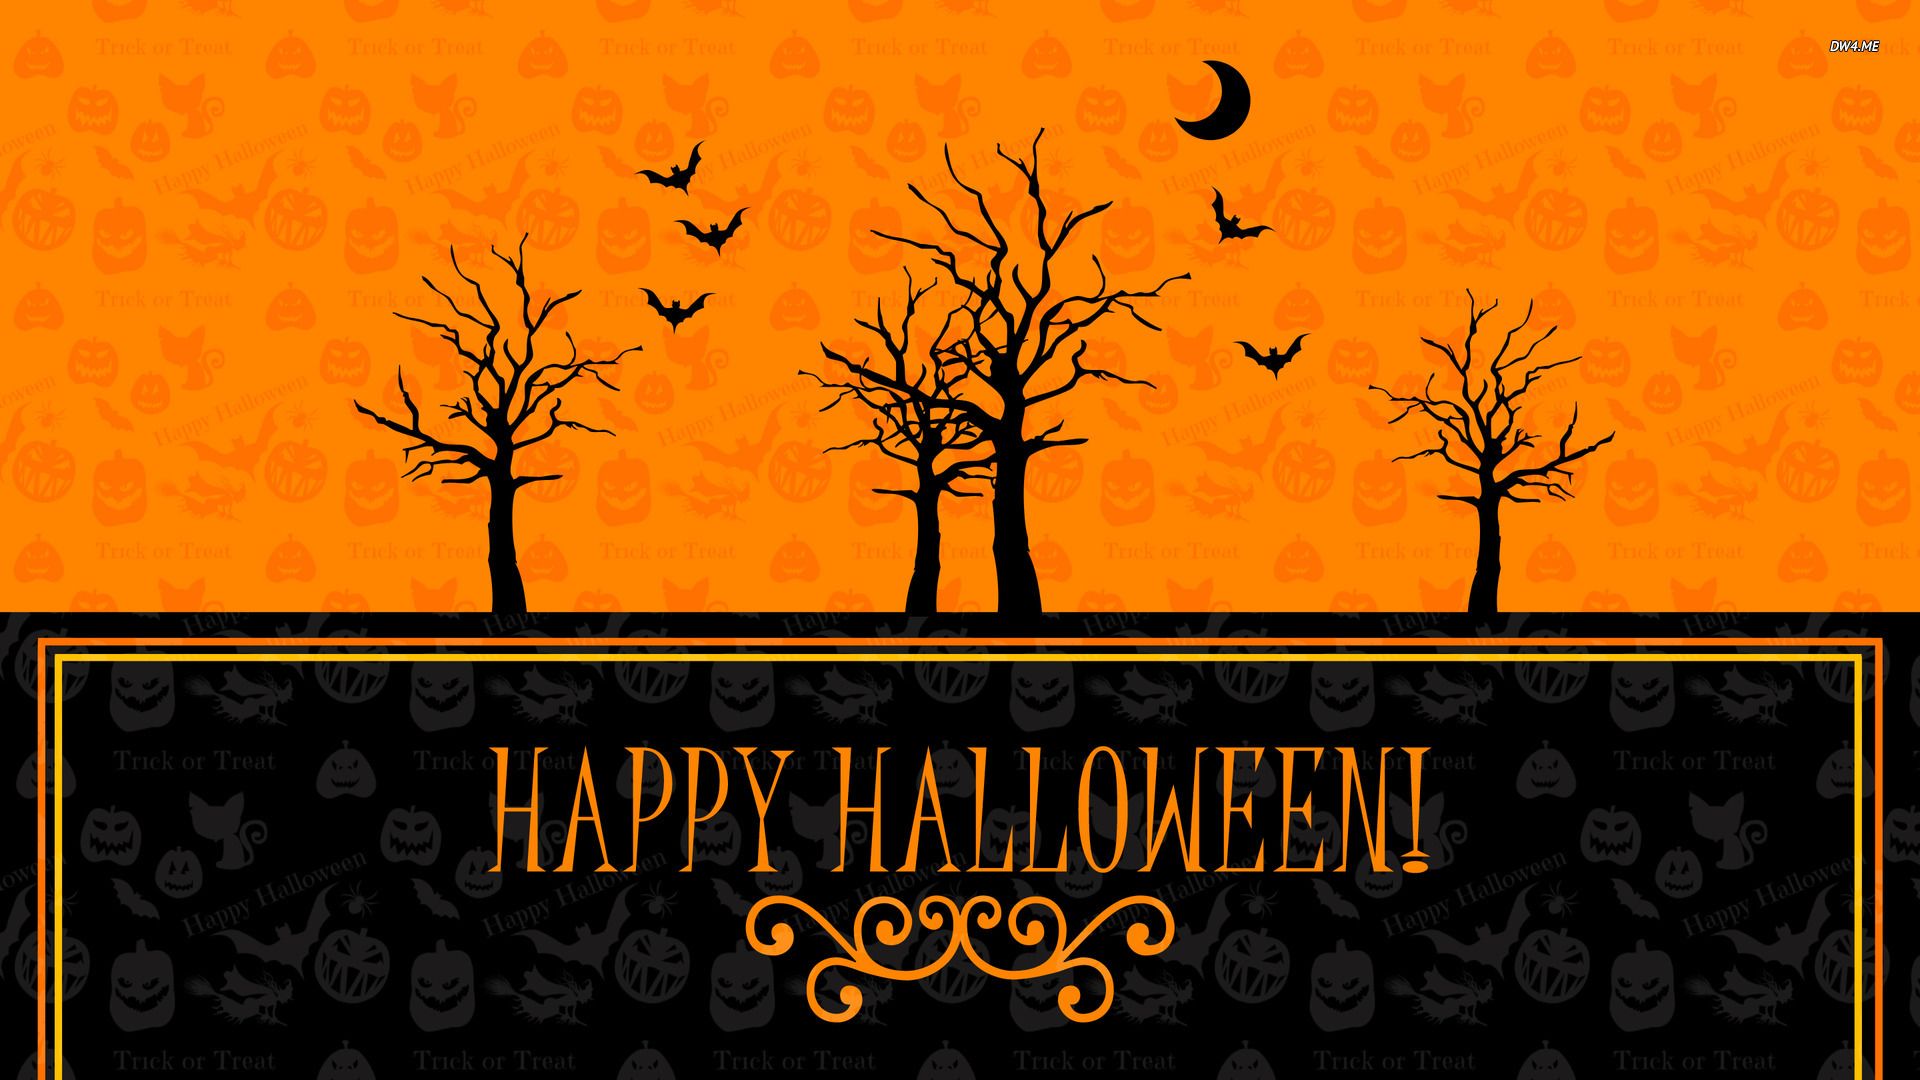 Best Halloween HD Wallpaper Collection (22 hottest topics for Halloween) Monthly Calendar